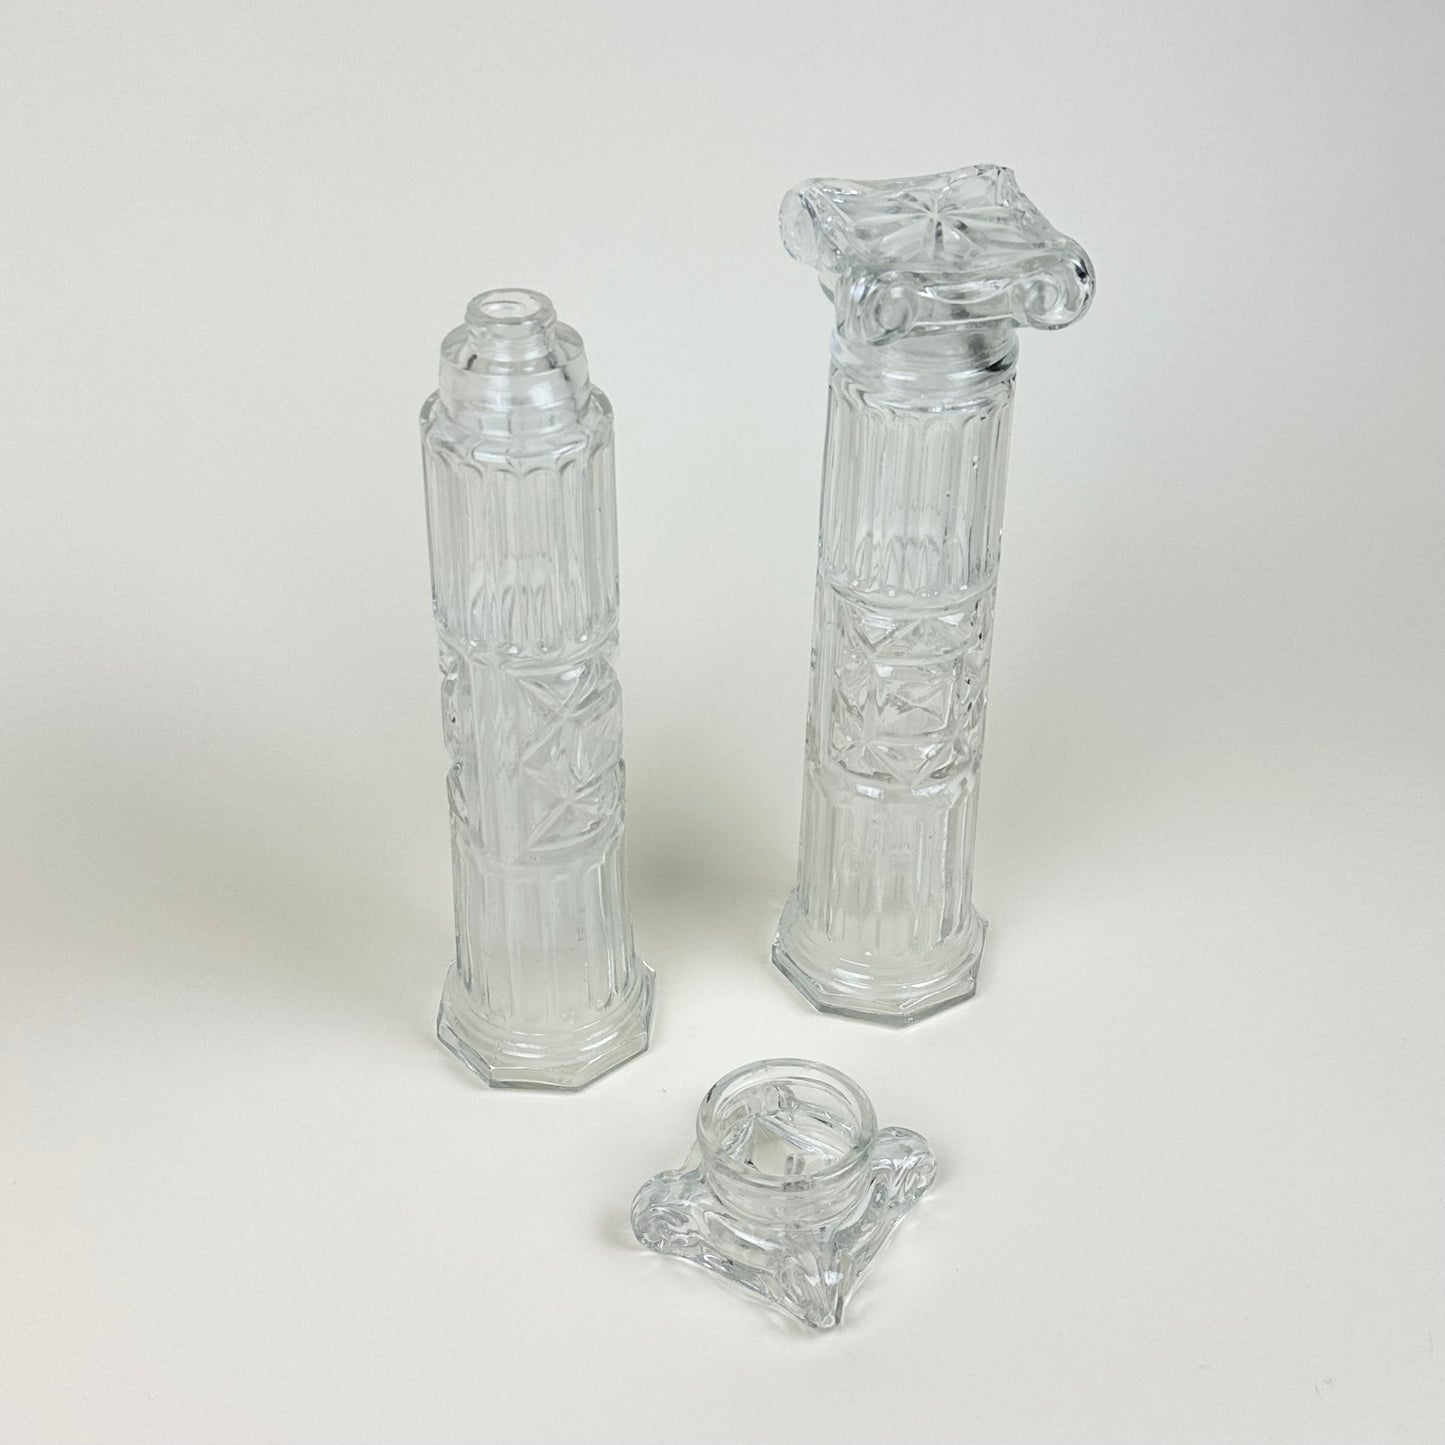 Glass bottles shaped like Roman pillars, pair